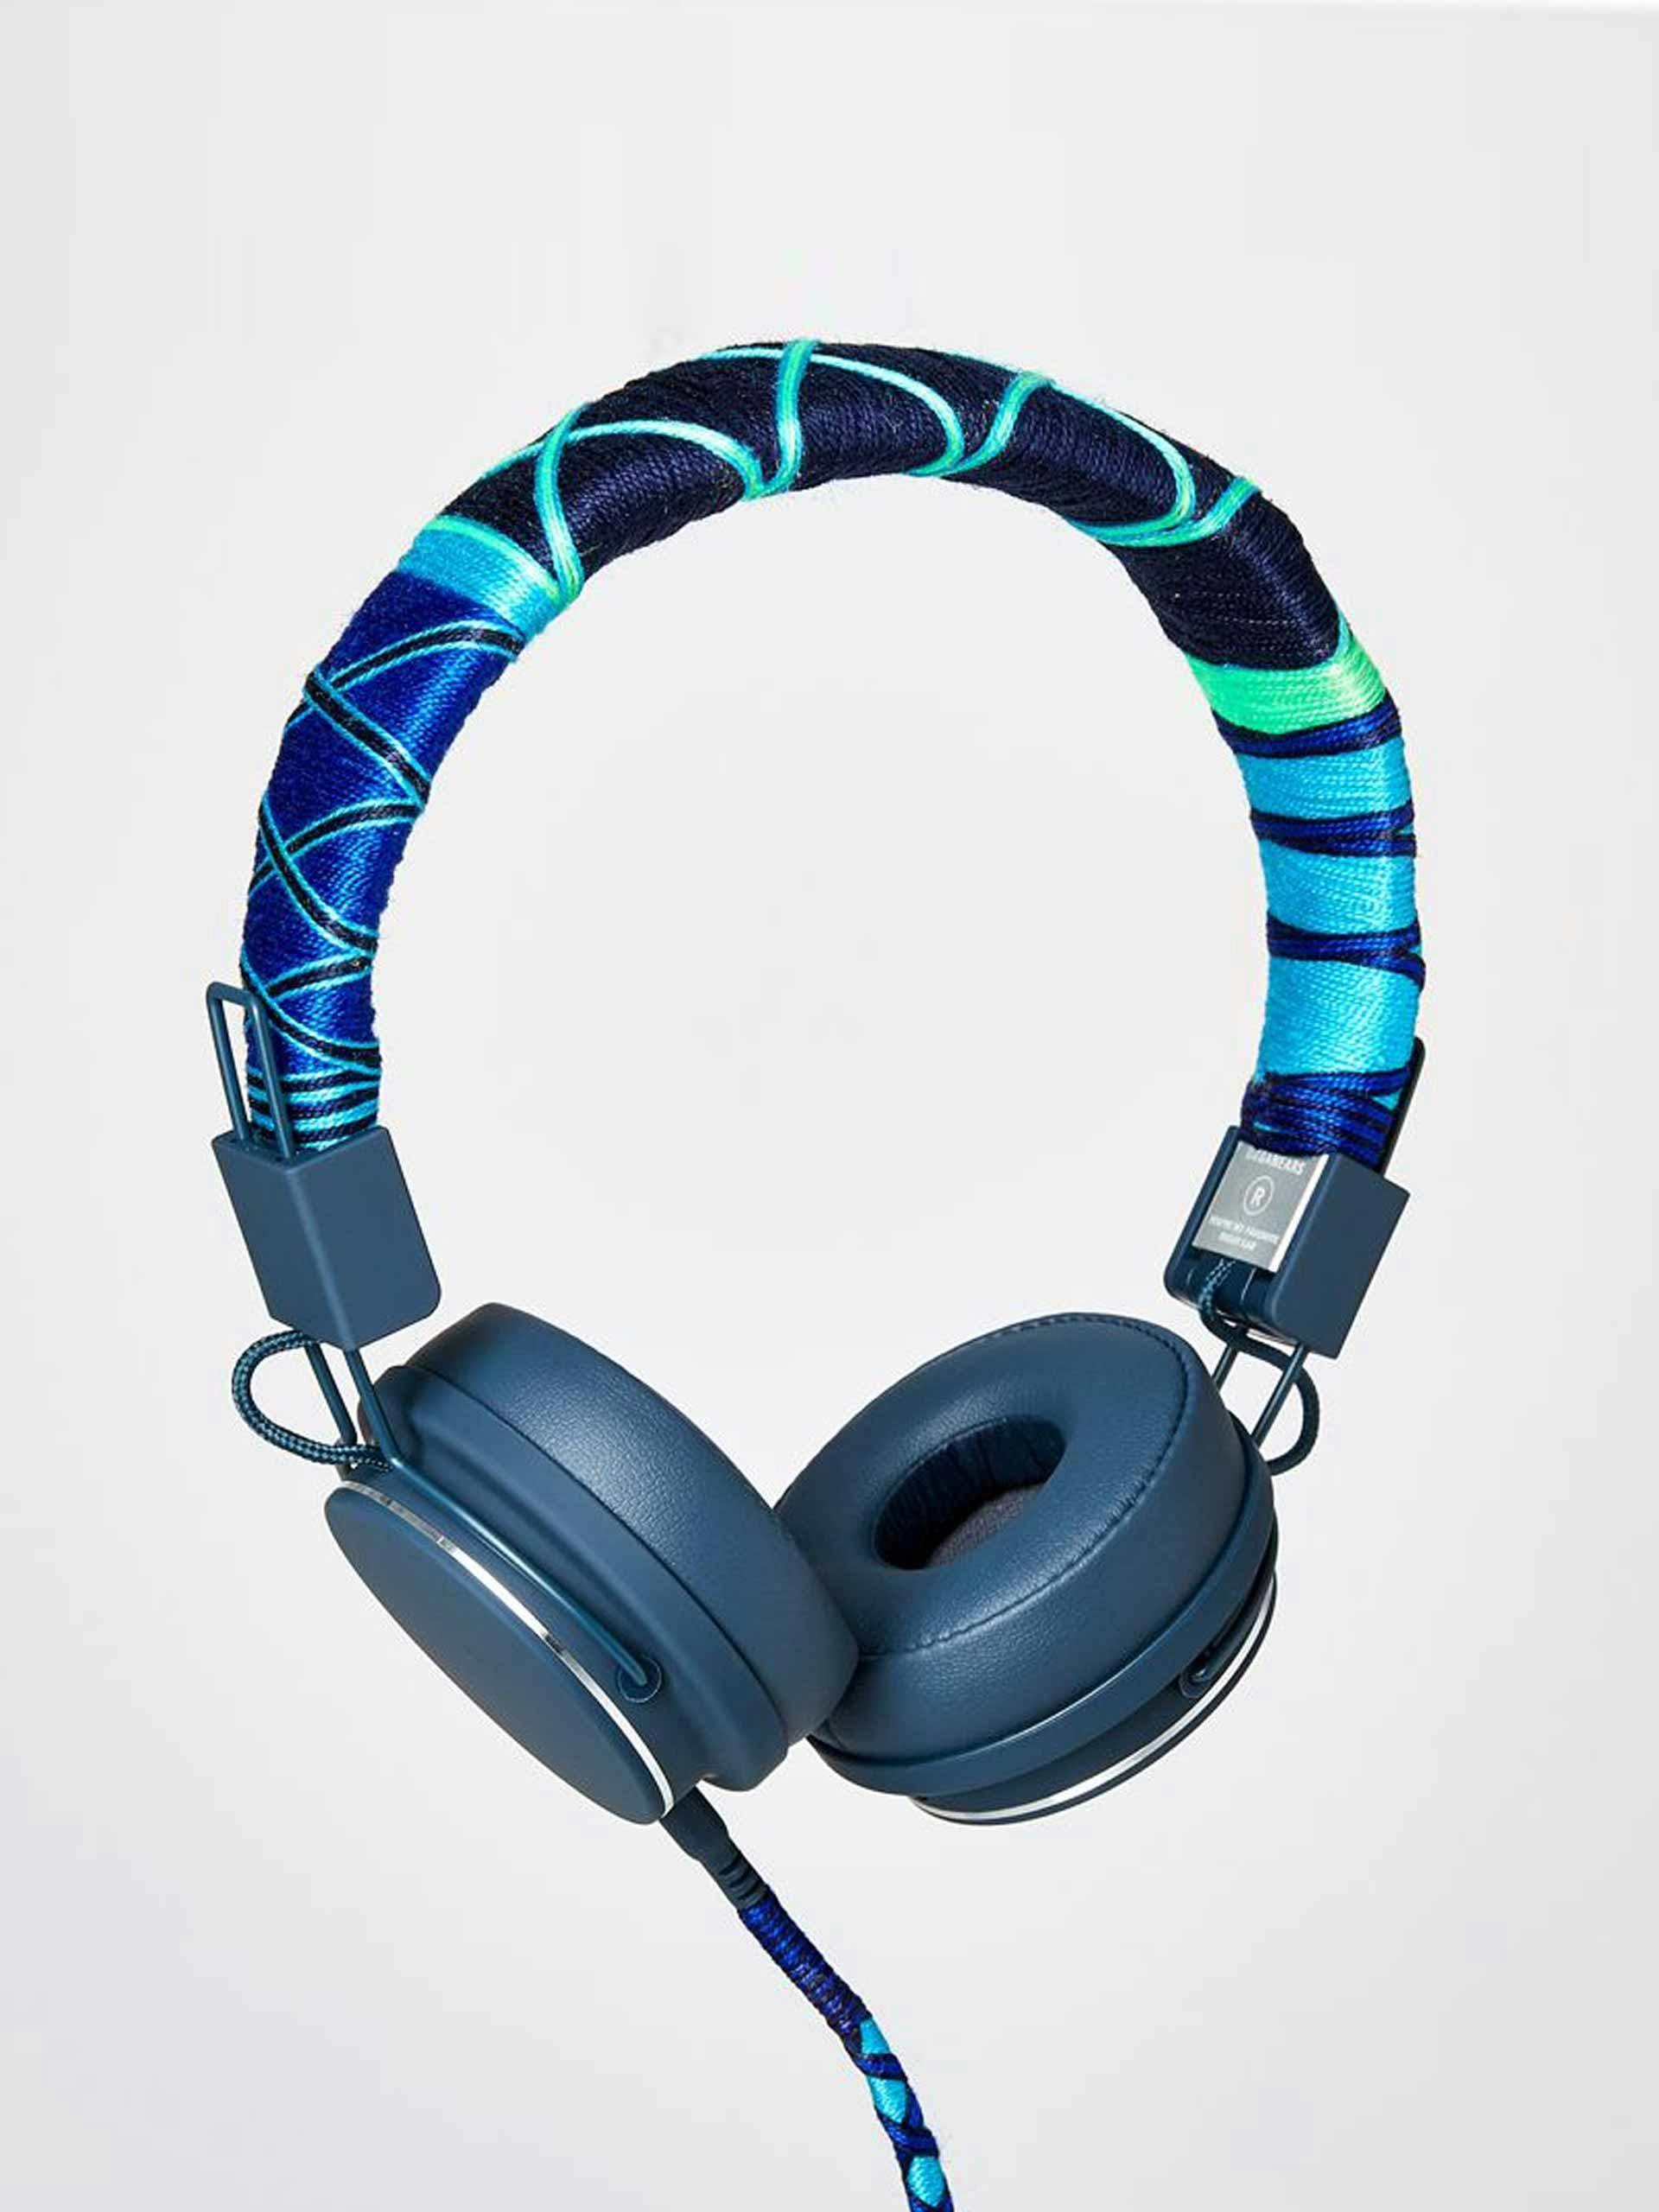 Handcrafted-detailed headphones